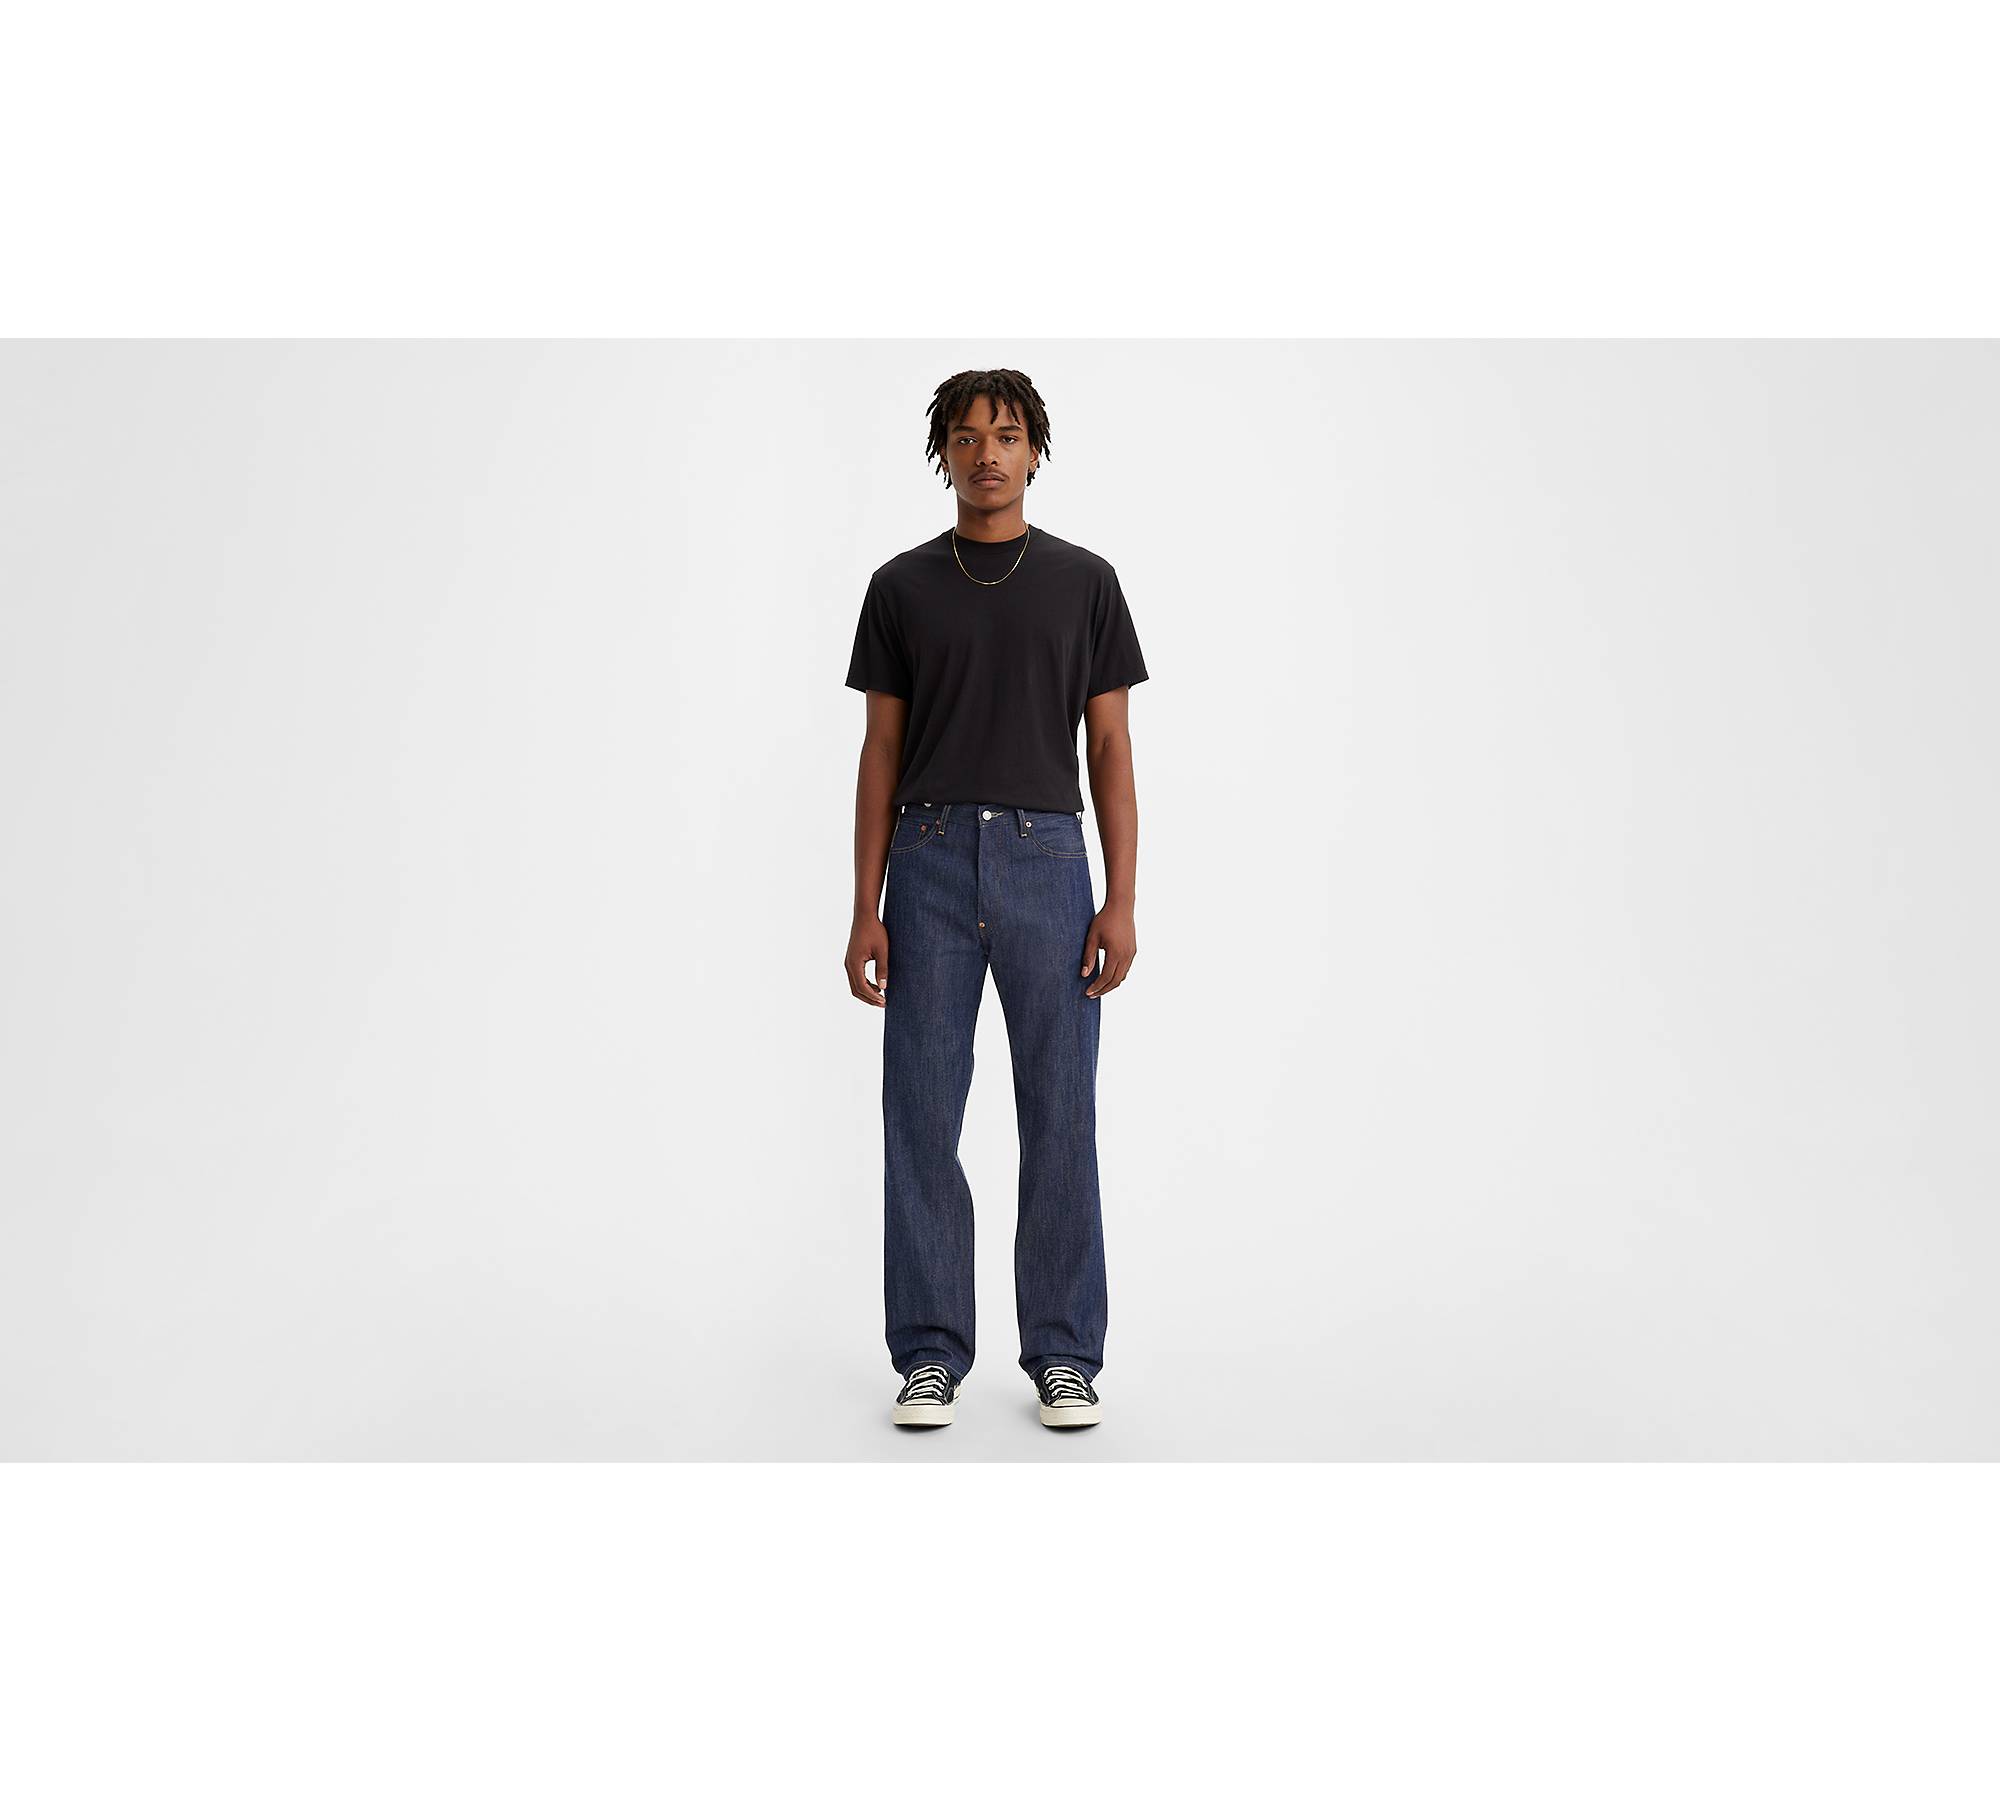 Levi's 501 White Oak Cone Denim Button Fly Jeans Mens… - Gem